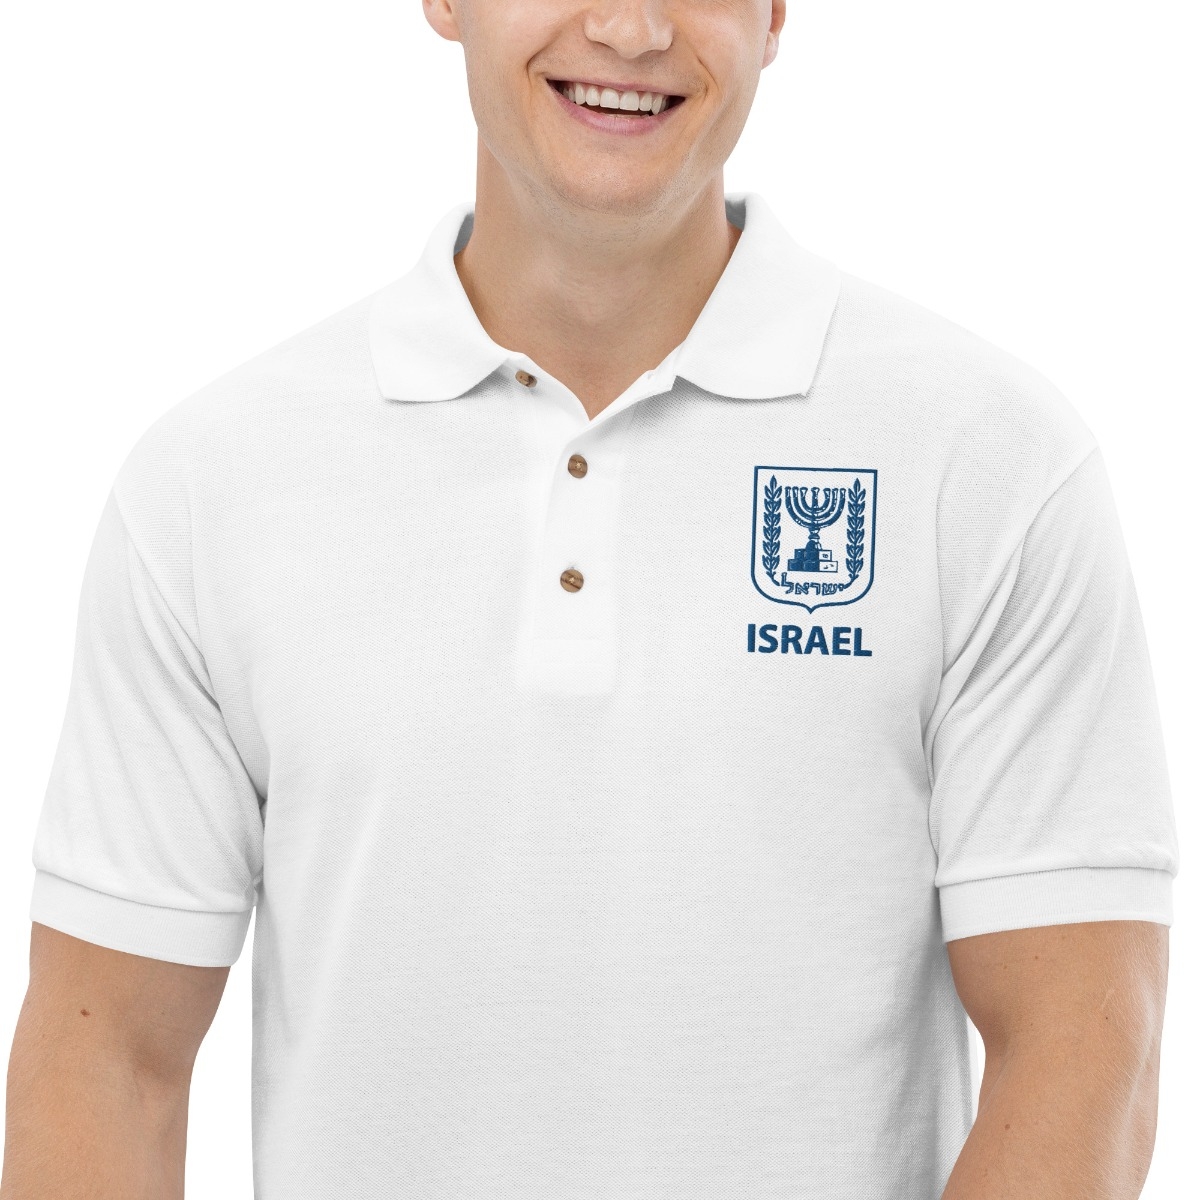 Israel Polo Shirt (Choice of Colors) - 1